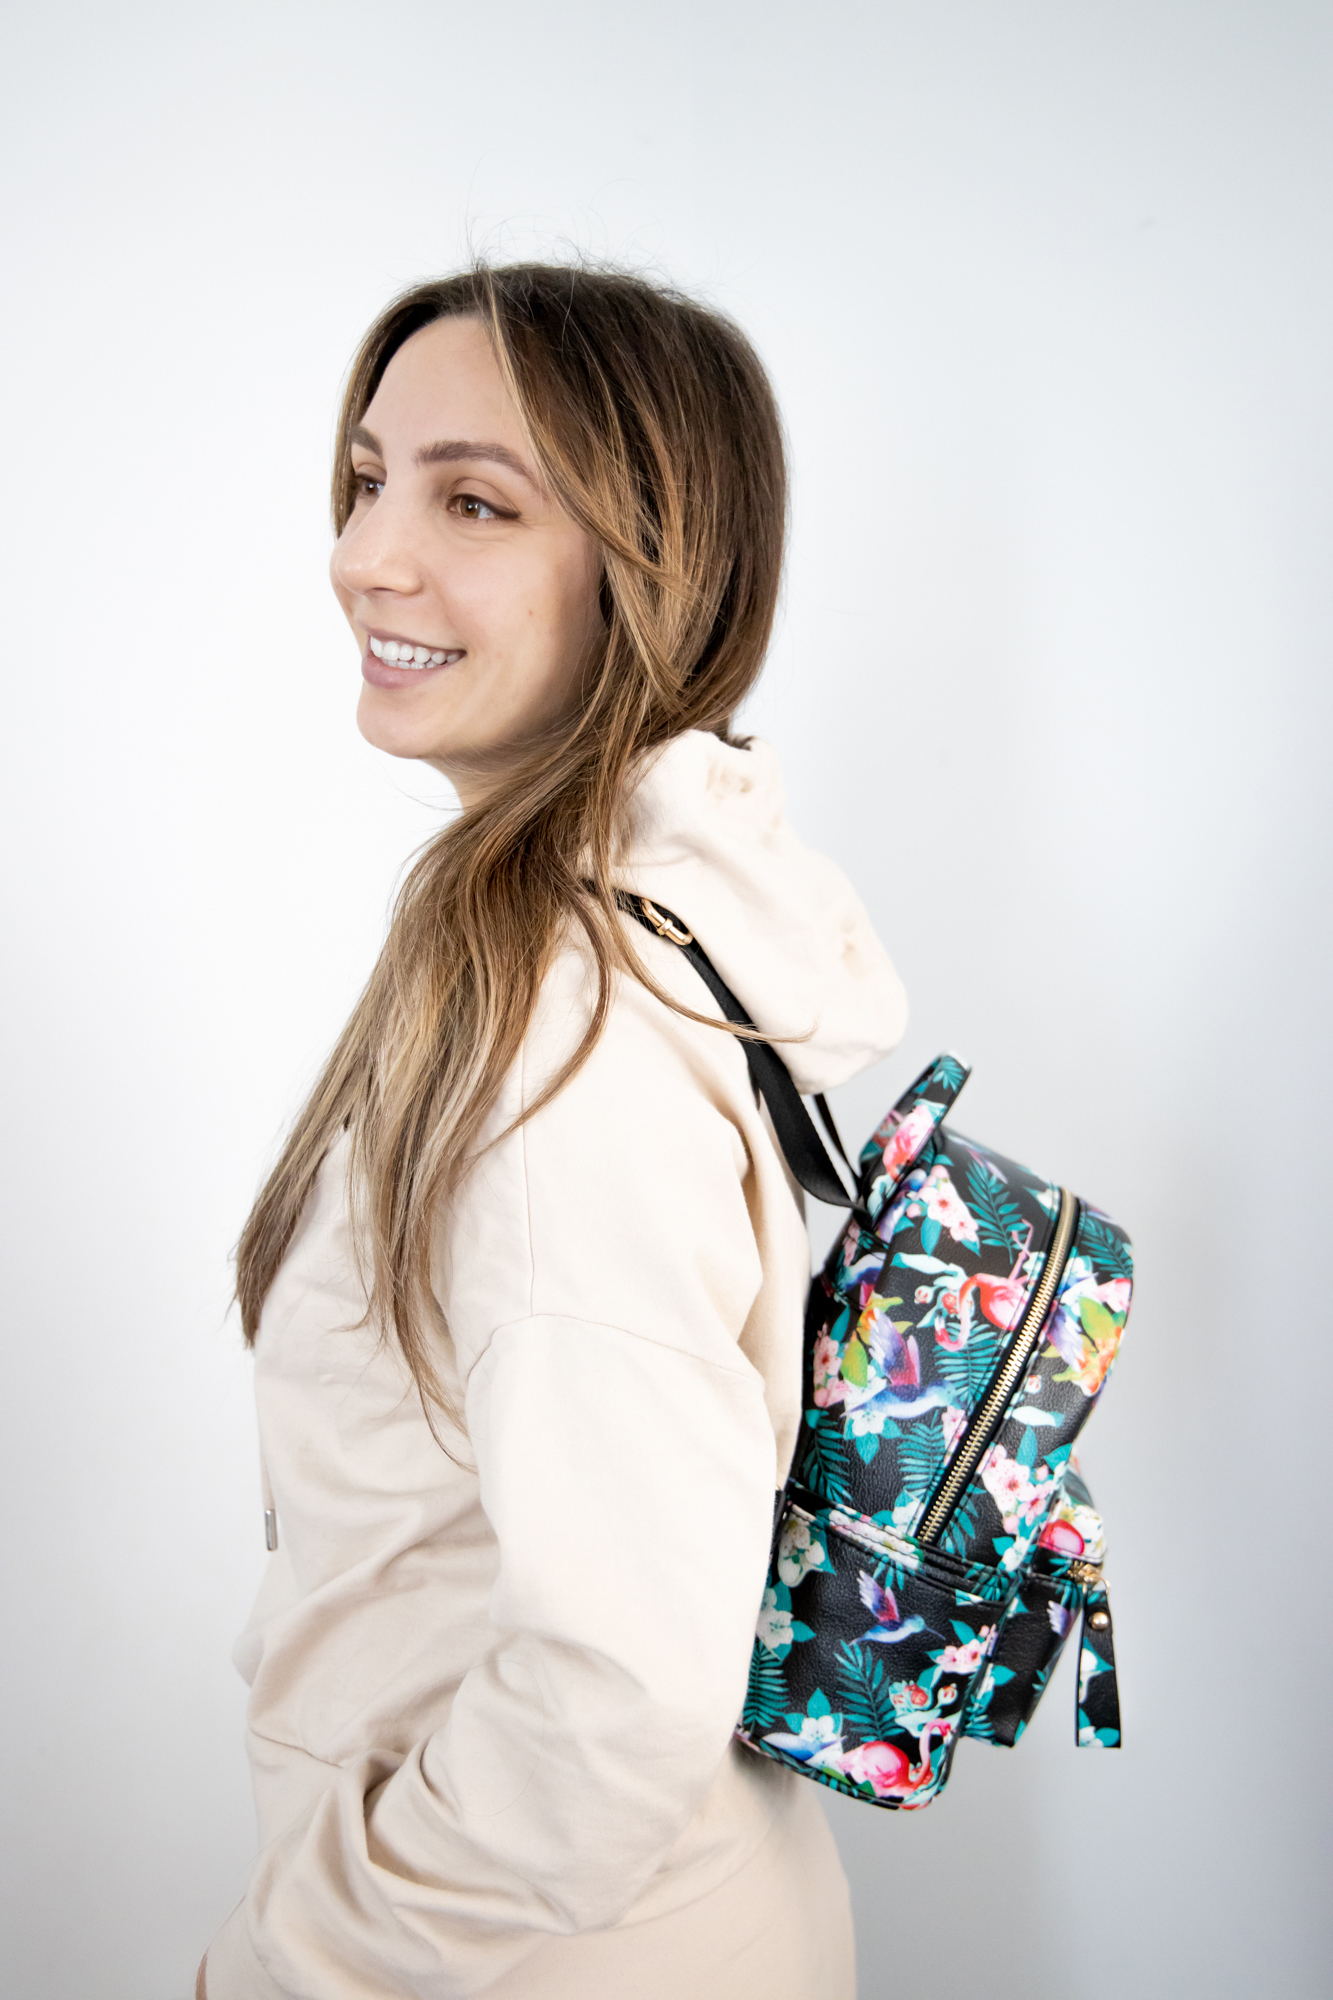 Convertible Backpack Purse – Adjustable & Vegan Leather – Jolie Vaughan  Mature Women's Online Clothing Boutique